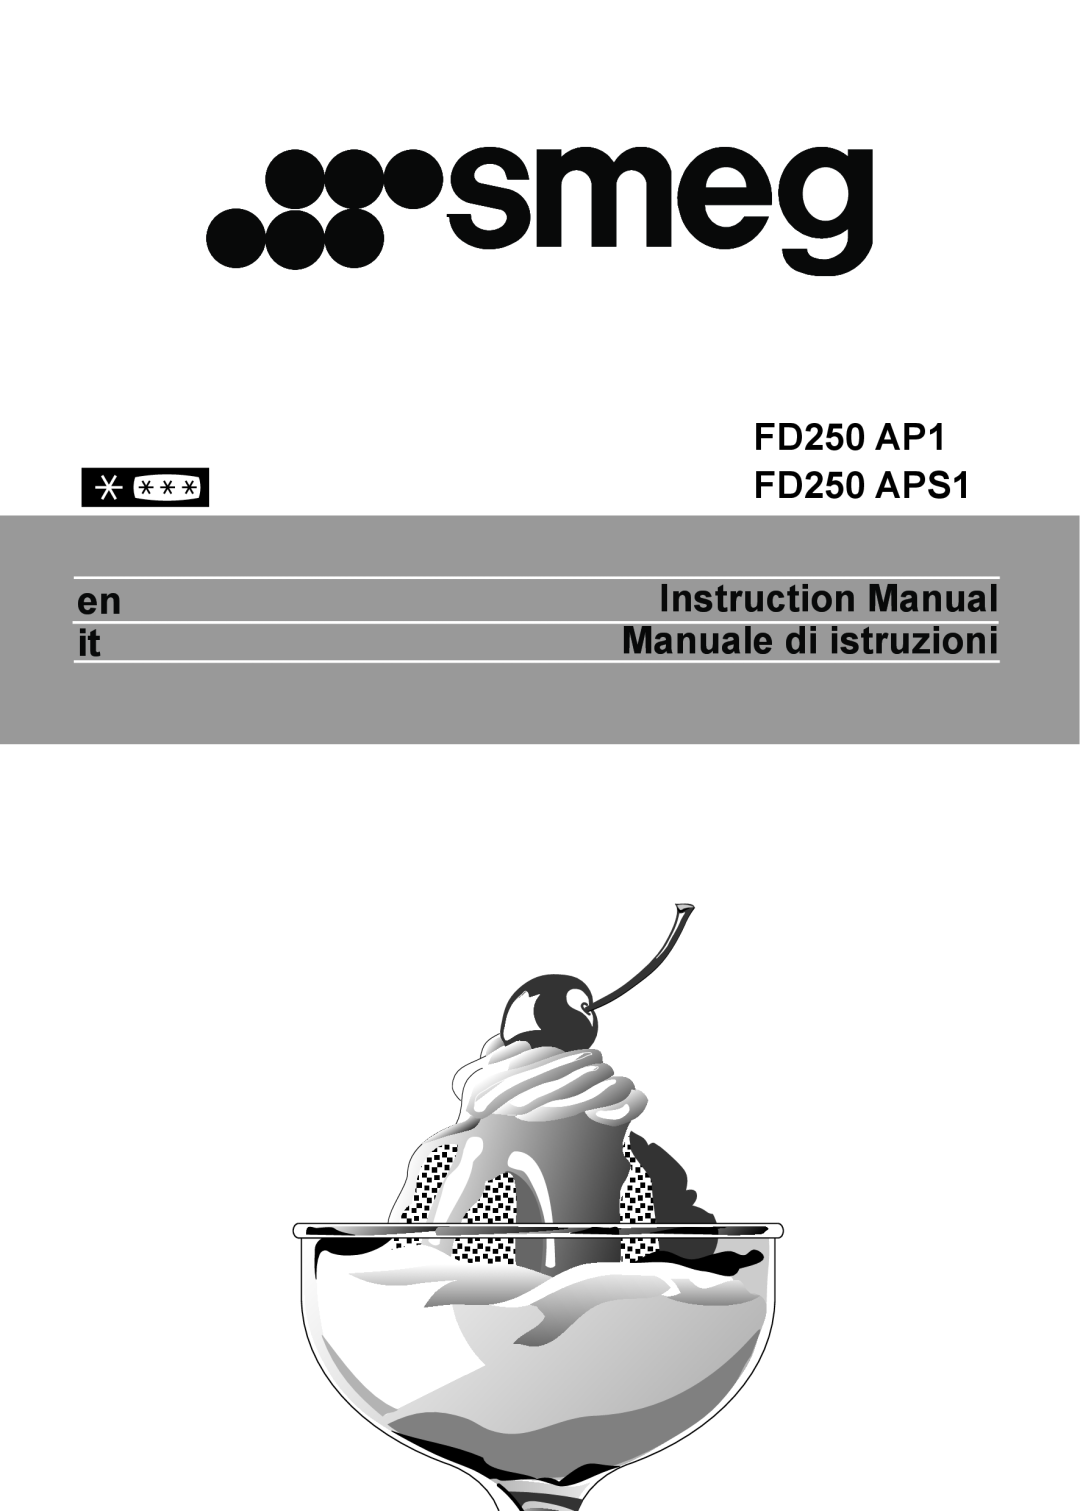 Smeg FD250 AP1 instruction manual FD250 APS1, Manuale di istruzioni 